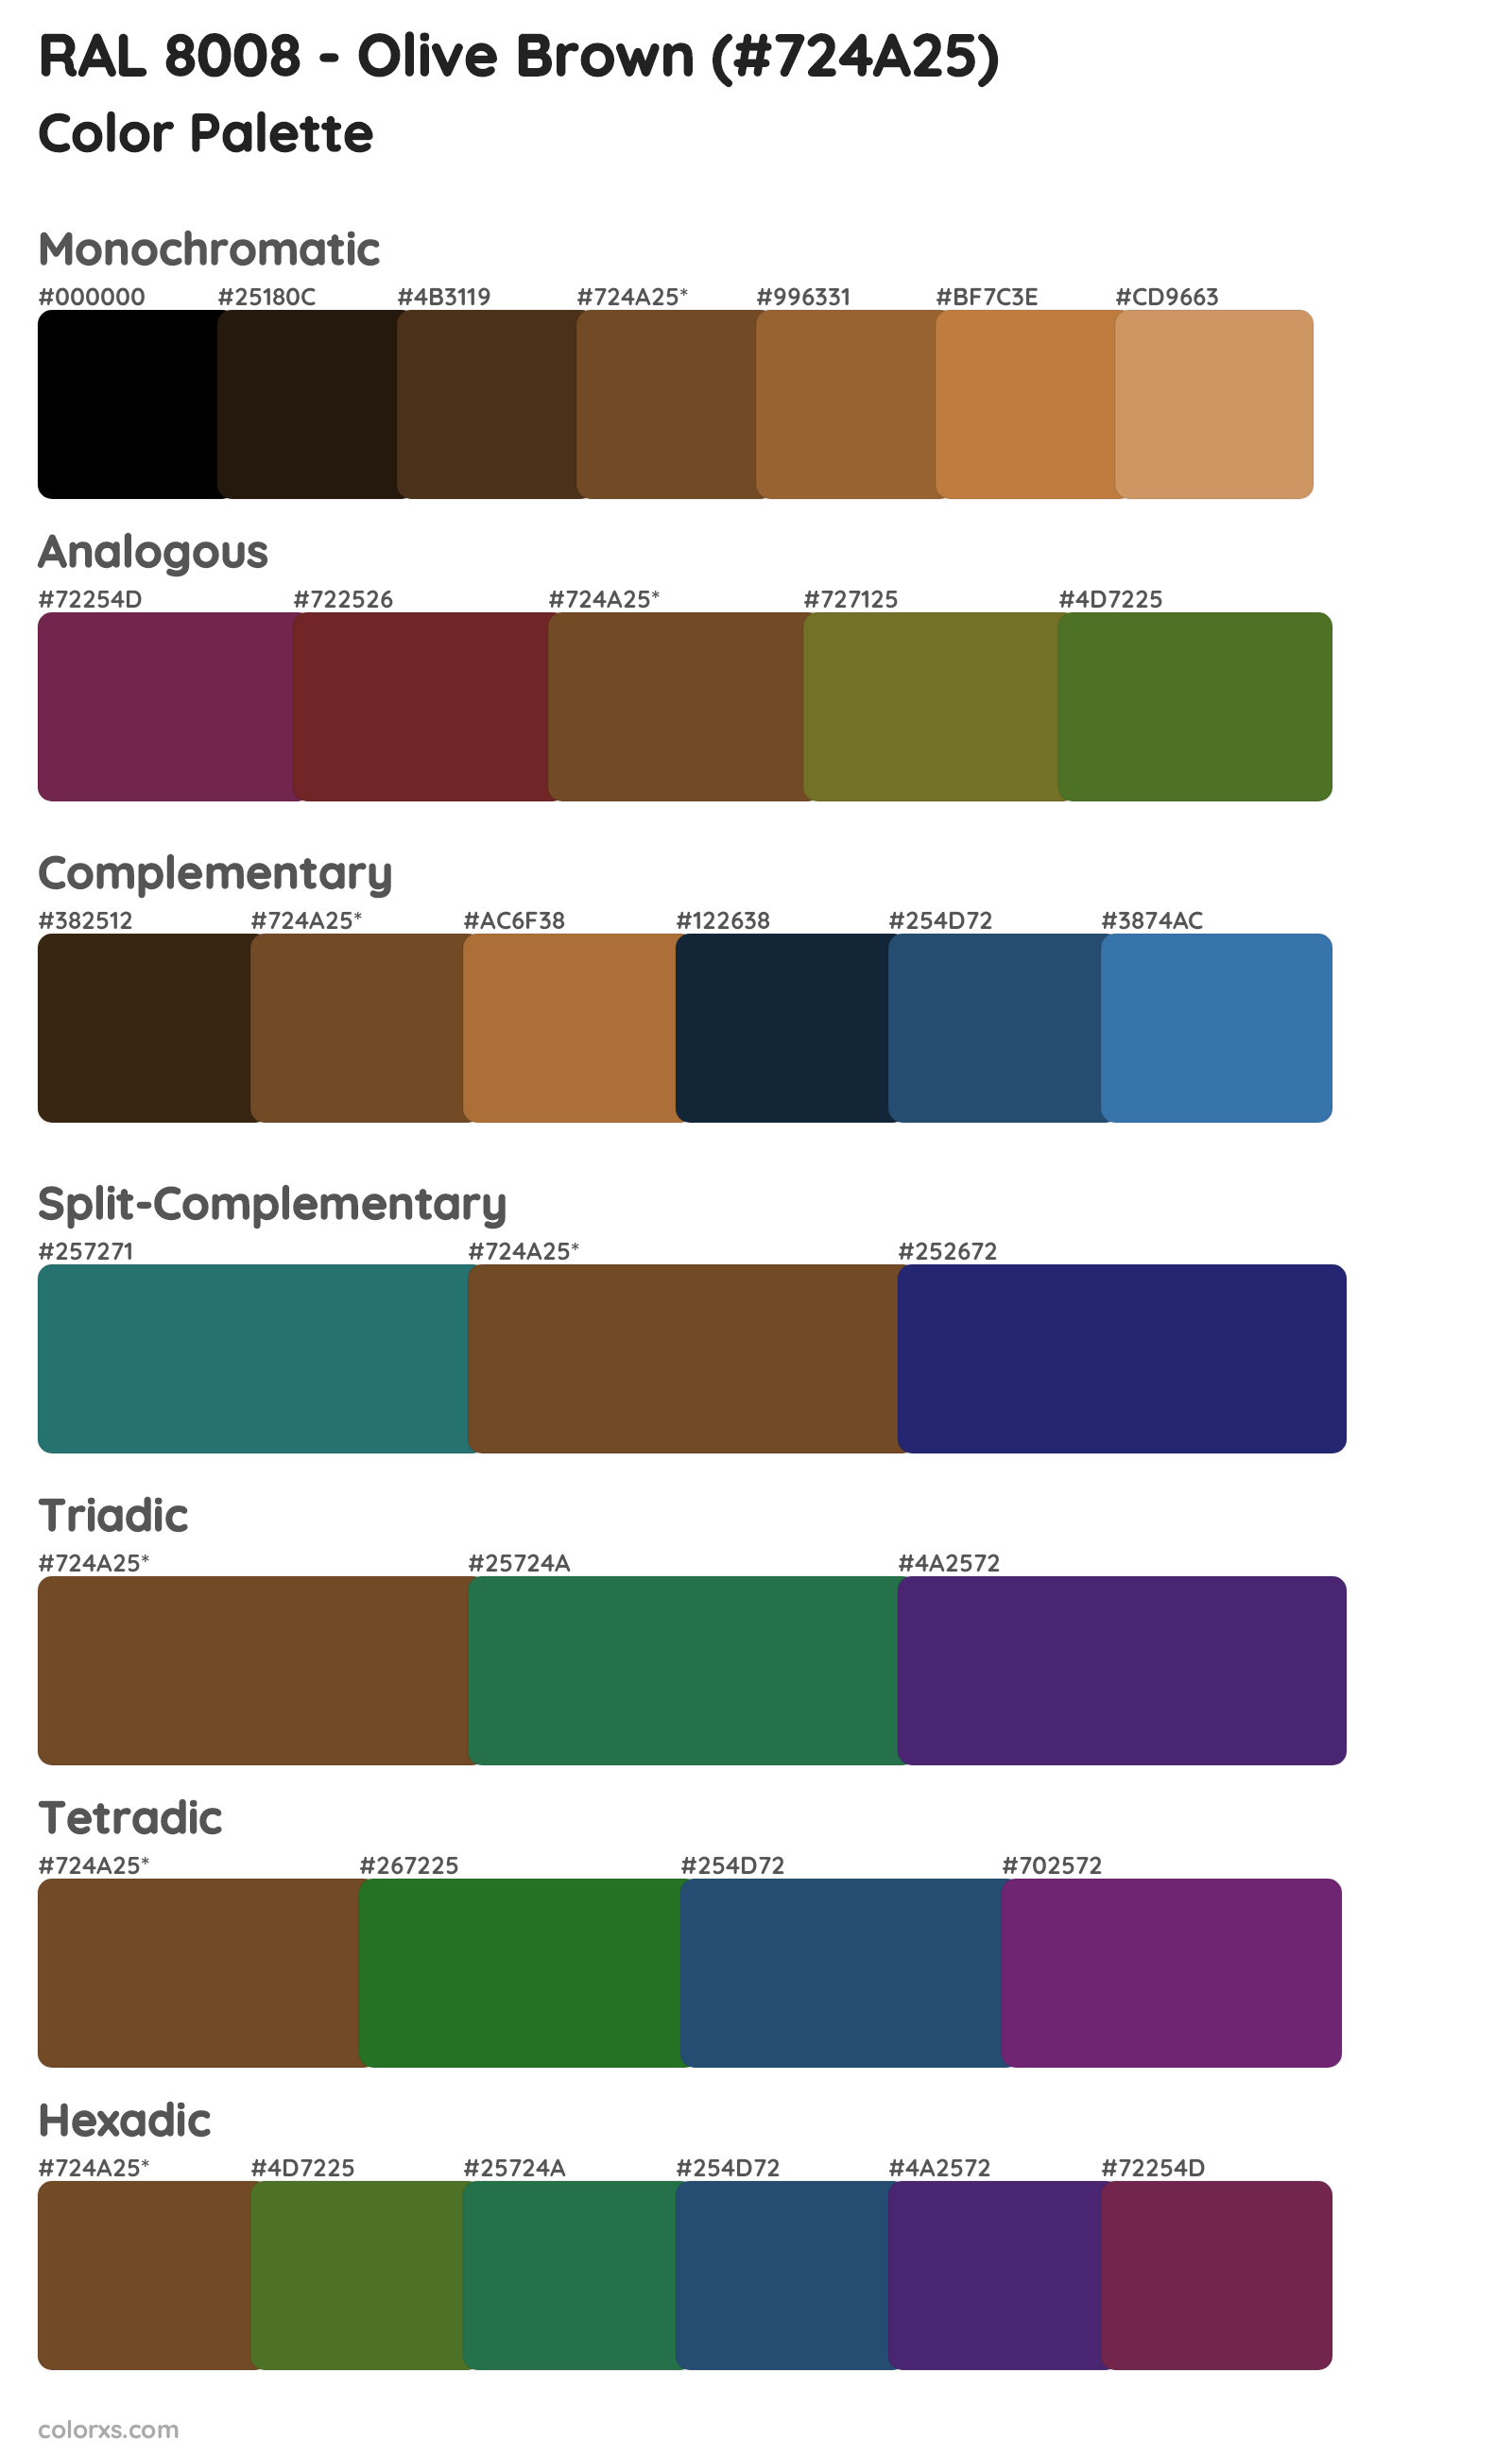 RAL 8008 - Olive Brown Color Scheme Palettes